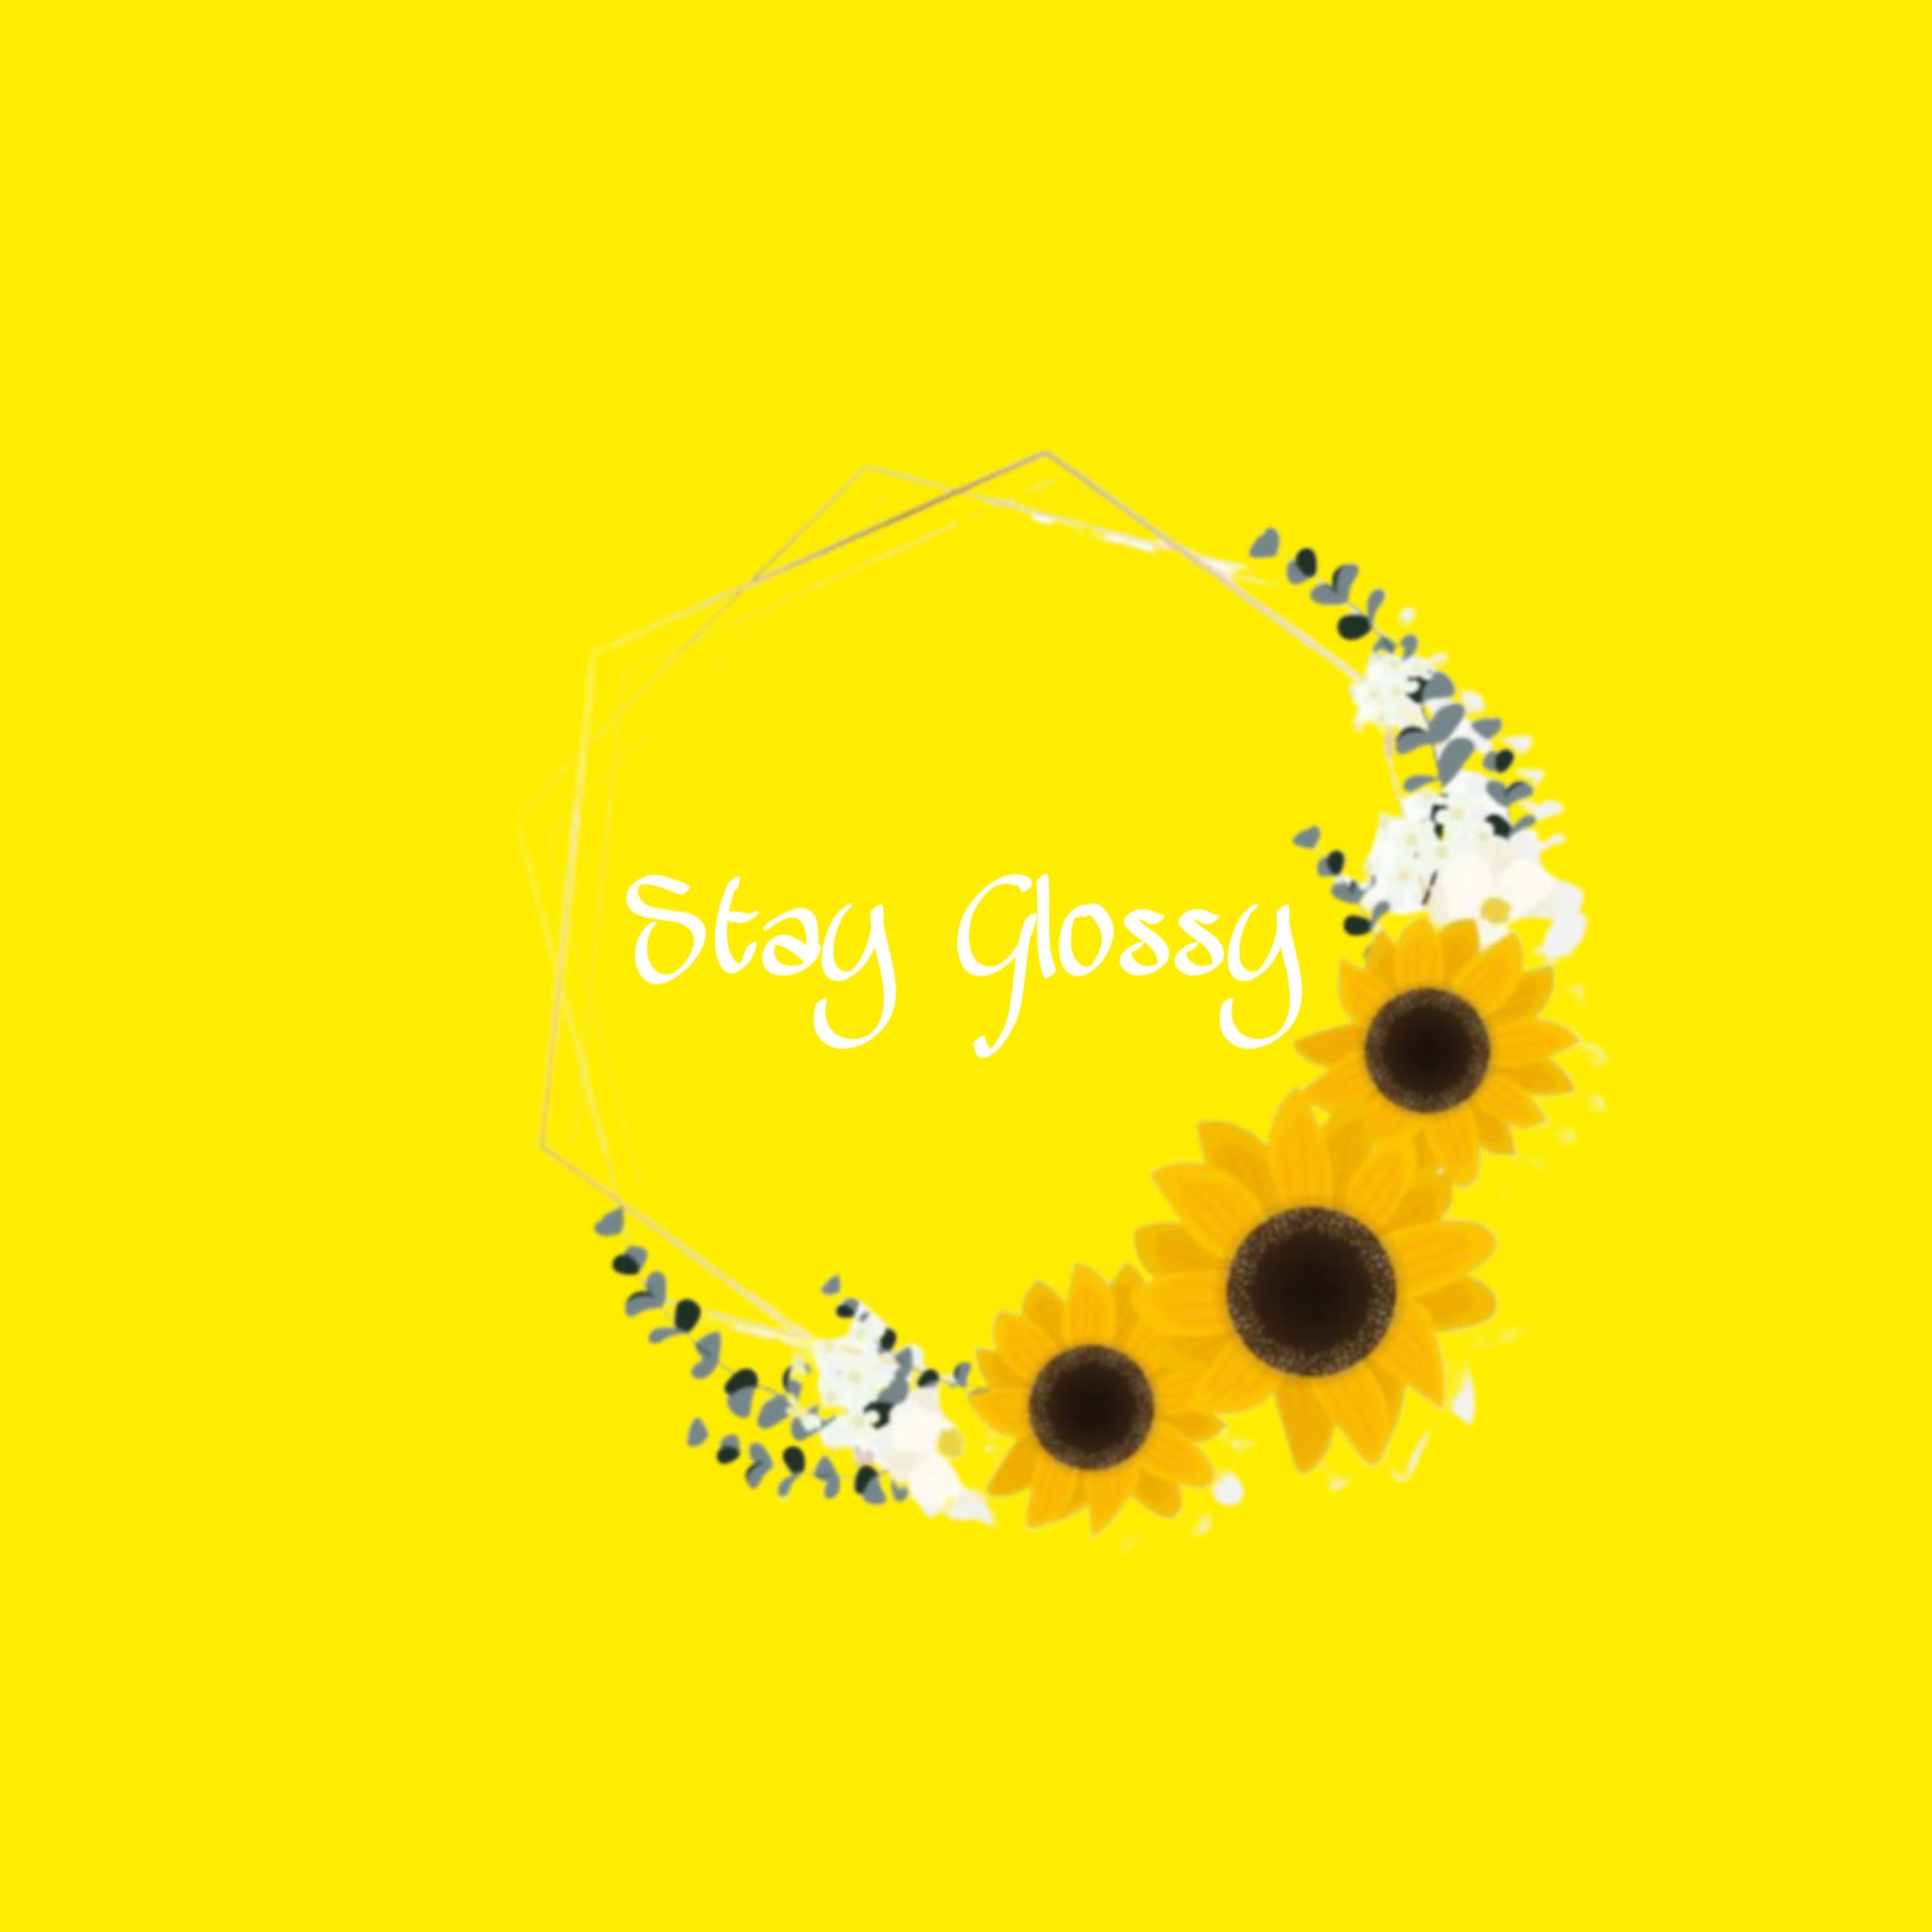 Stay Glossy